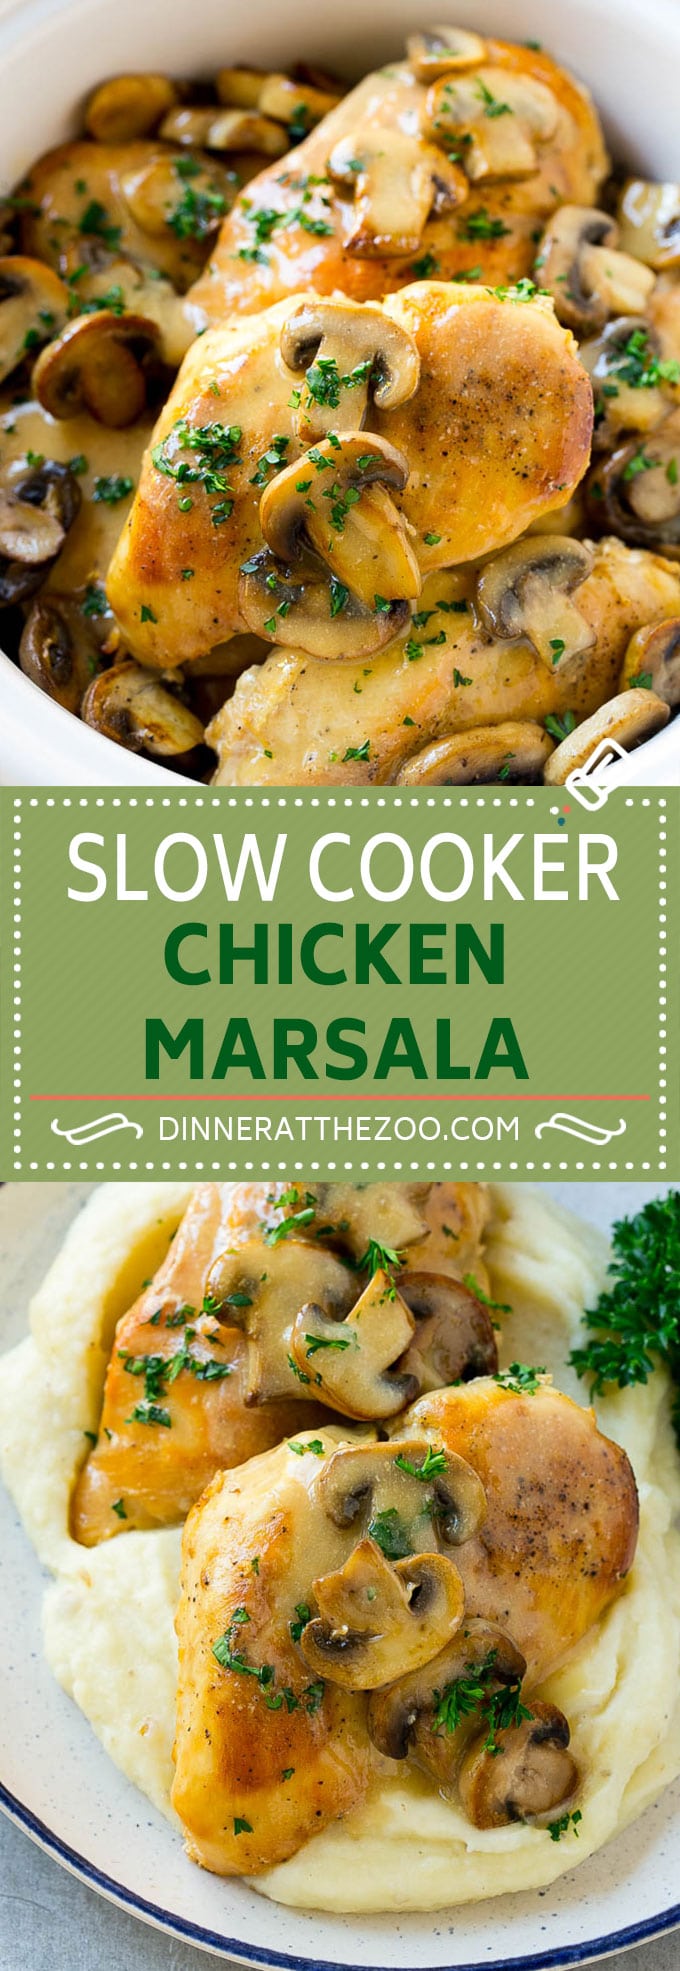 Slow Cooker Chicken Marsala Recipe | Crock Pot Chicken Marsala | Chicken with Mushrooms | Chicken Marsala Recipe #chicken #chickenmarsala #slowcooker #crockpot #dinner #dinneratthezoo